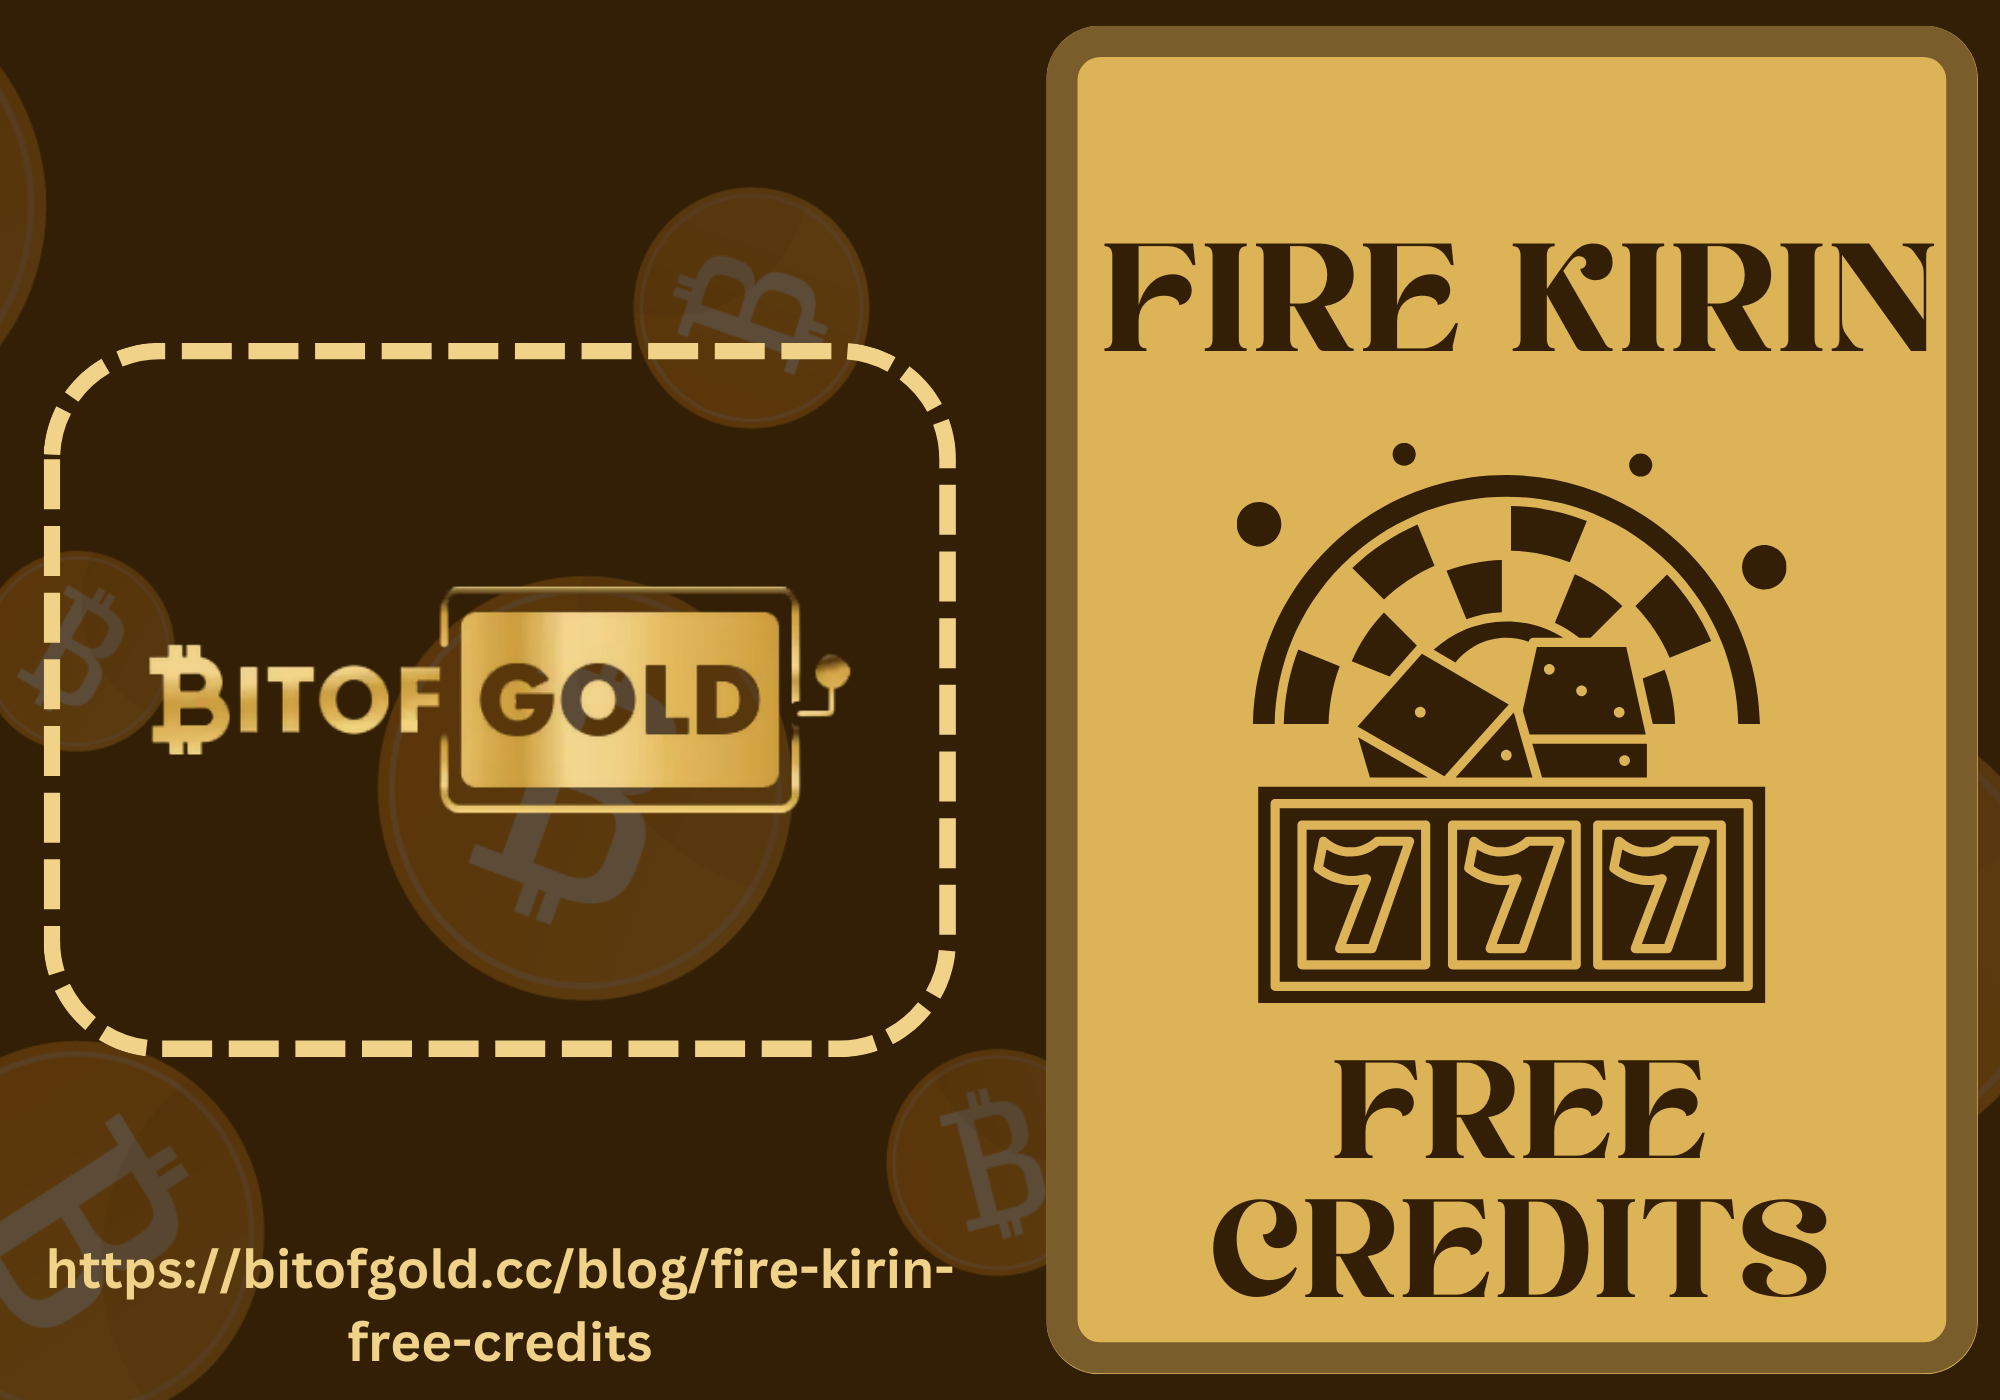 fire kirin free credits